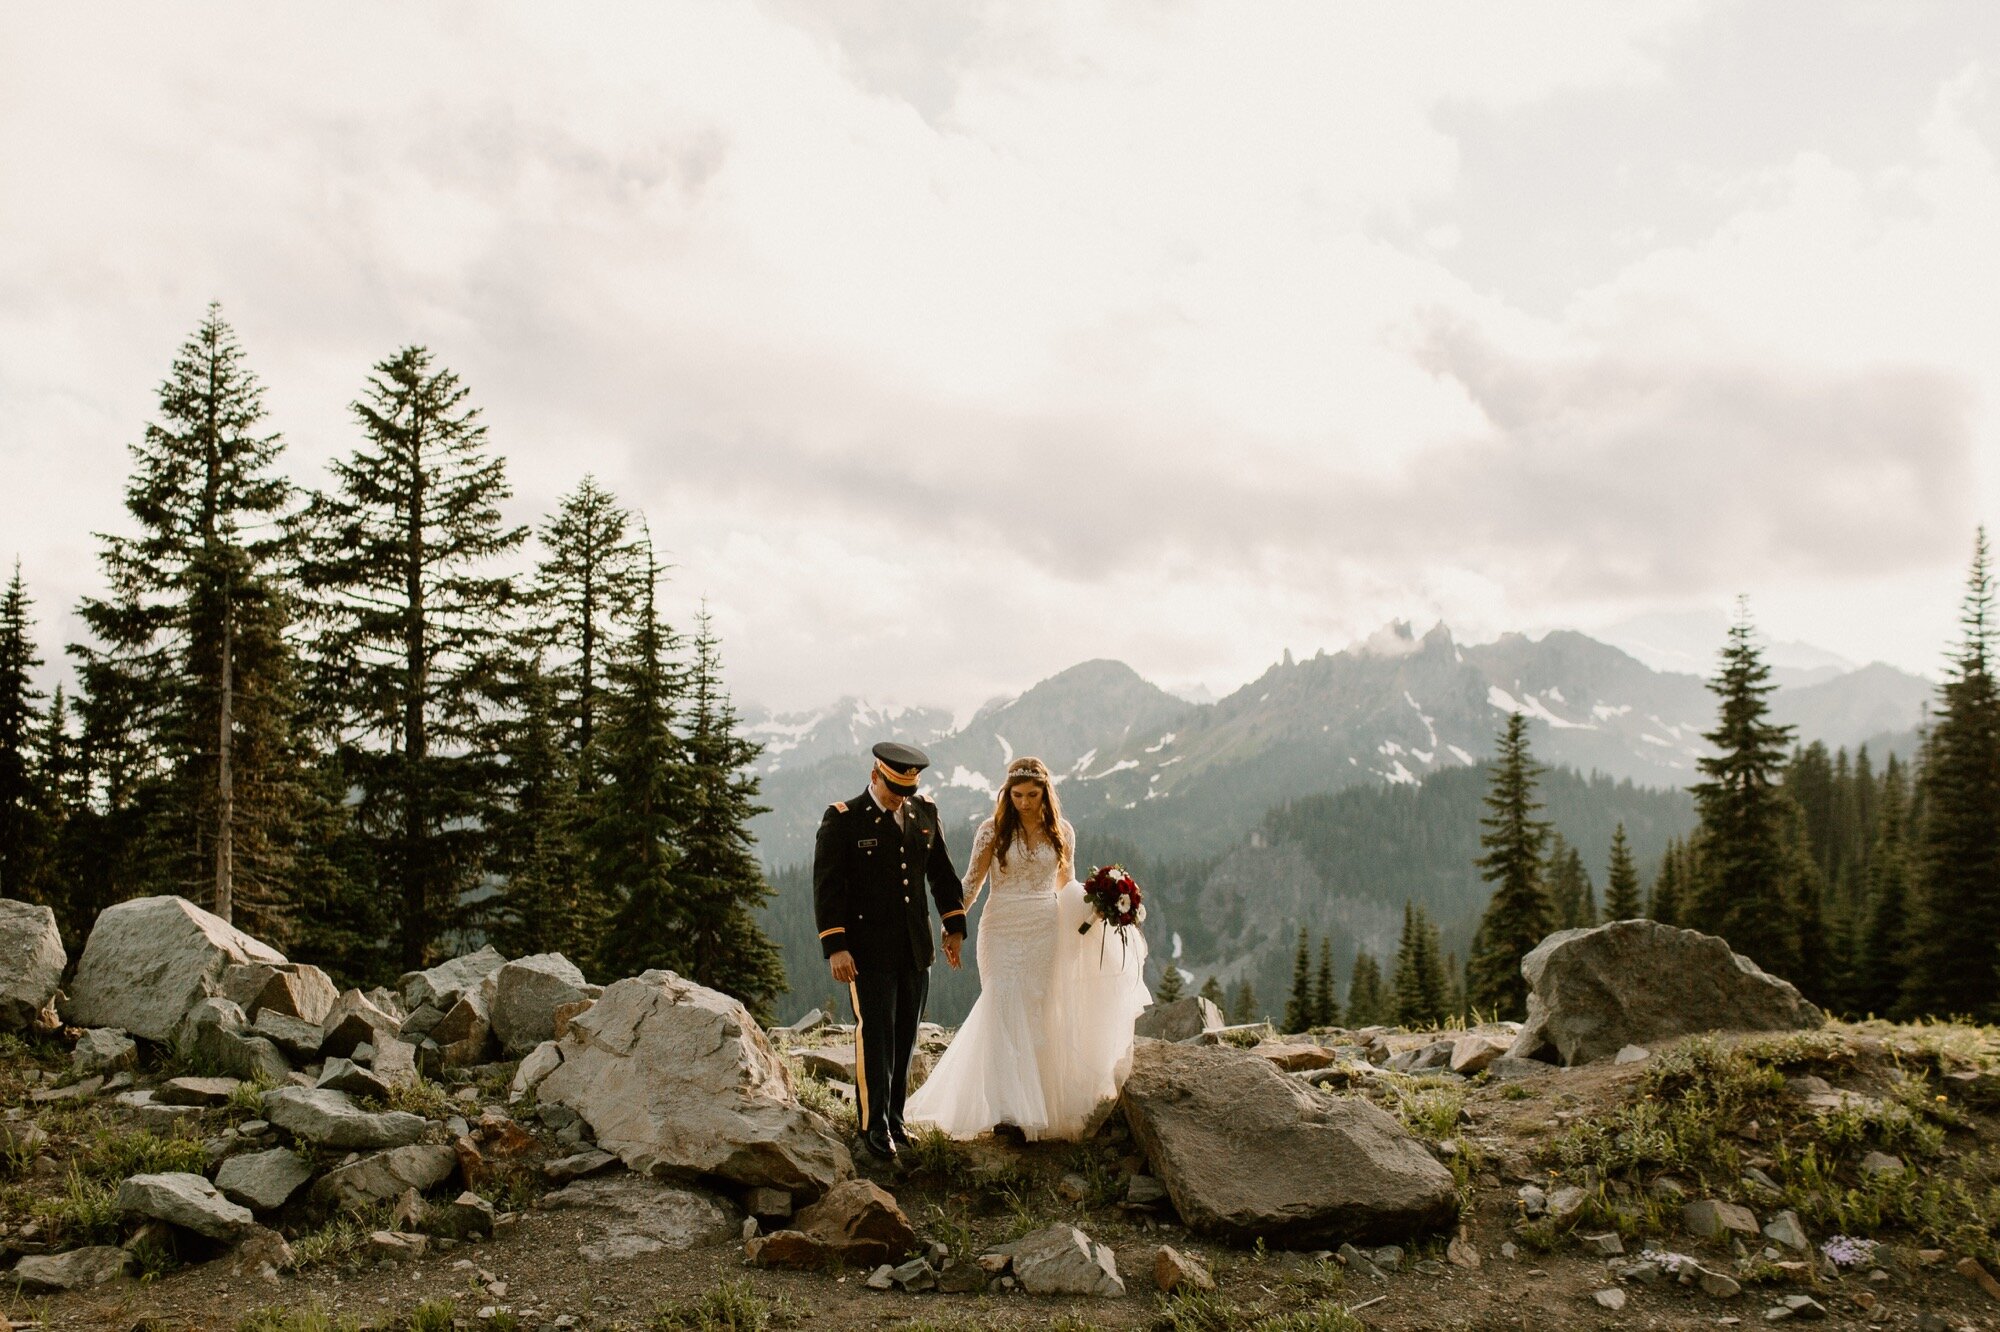 18_ginapaulson_katerinadalton-72_Mt. Rainier National Park Adventure Elopement Bride and Groom.jpg